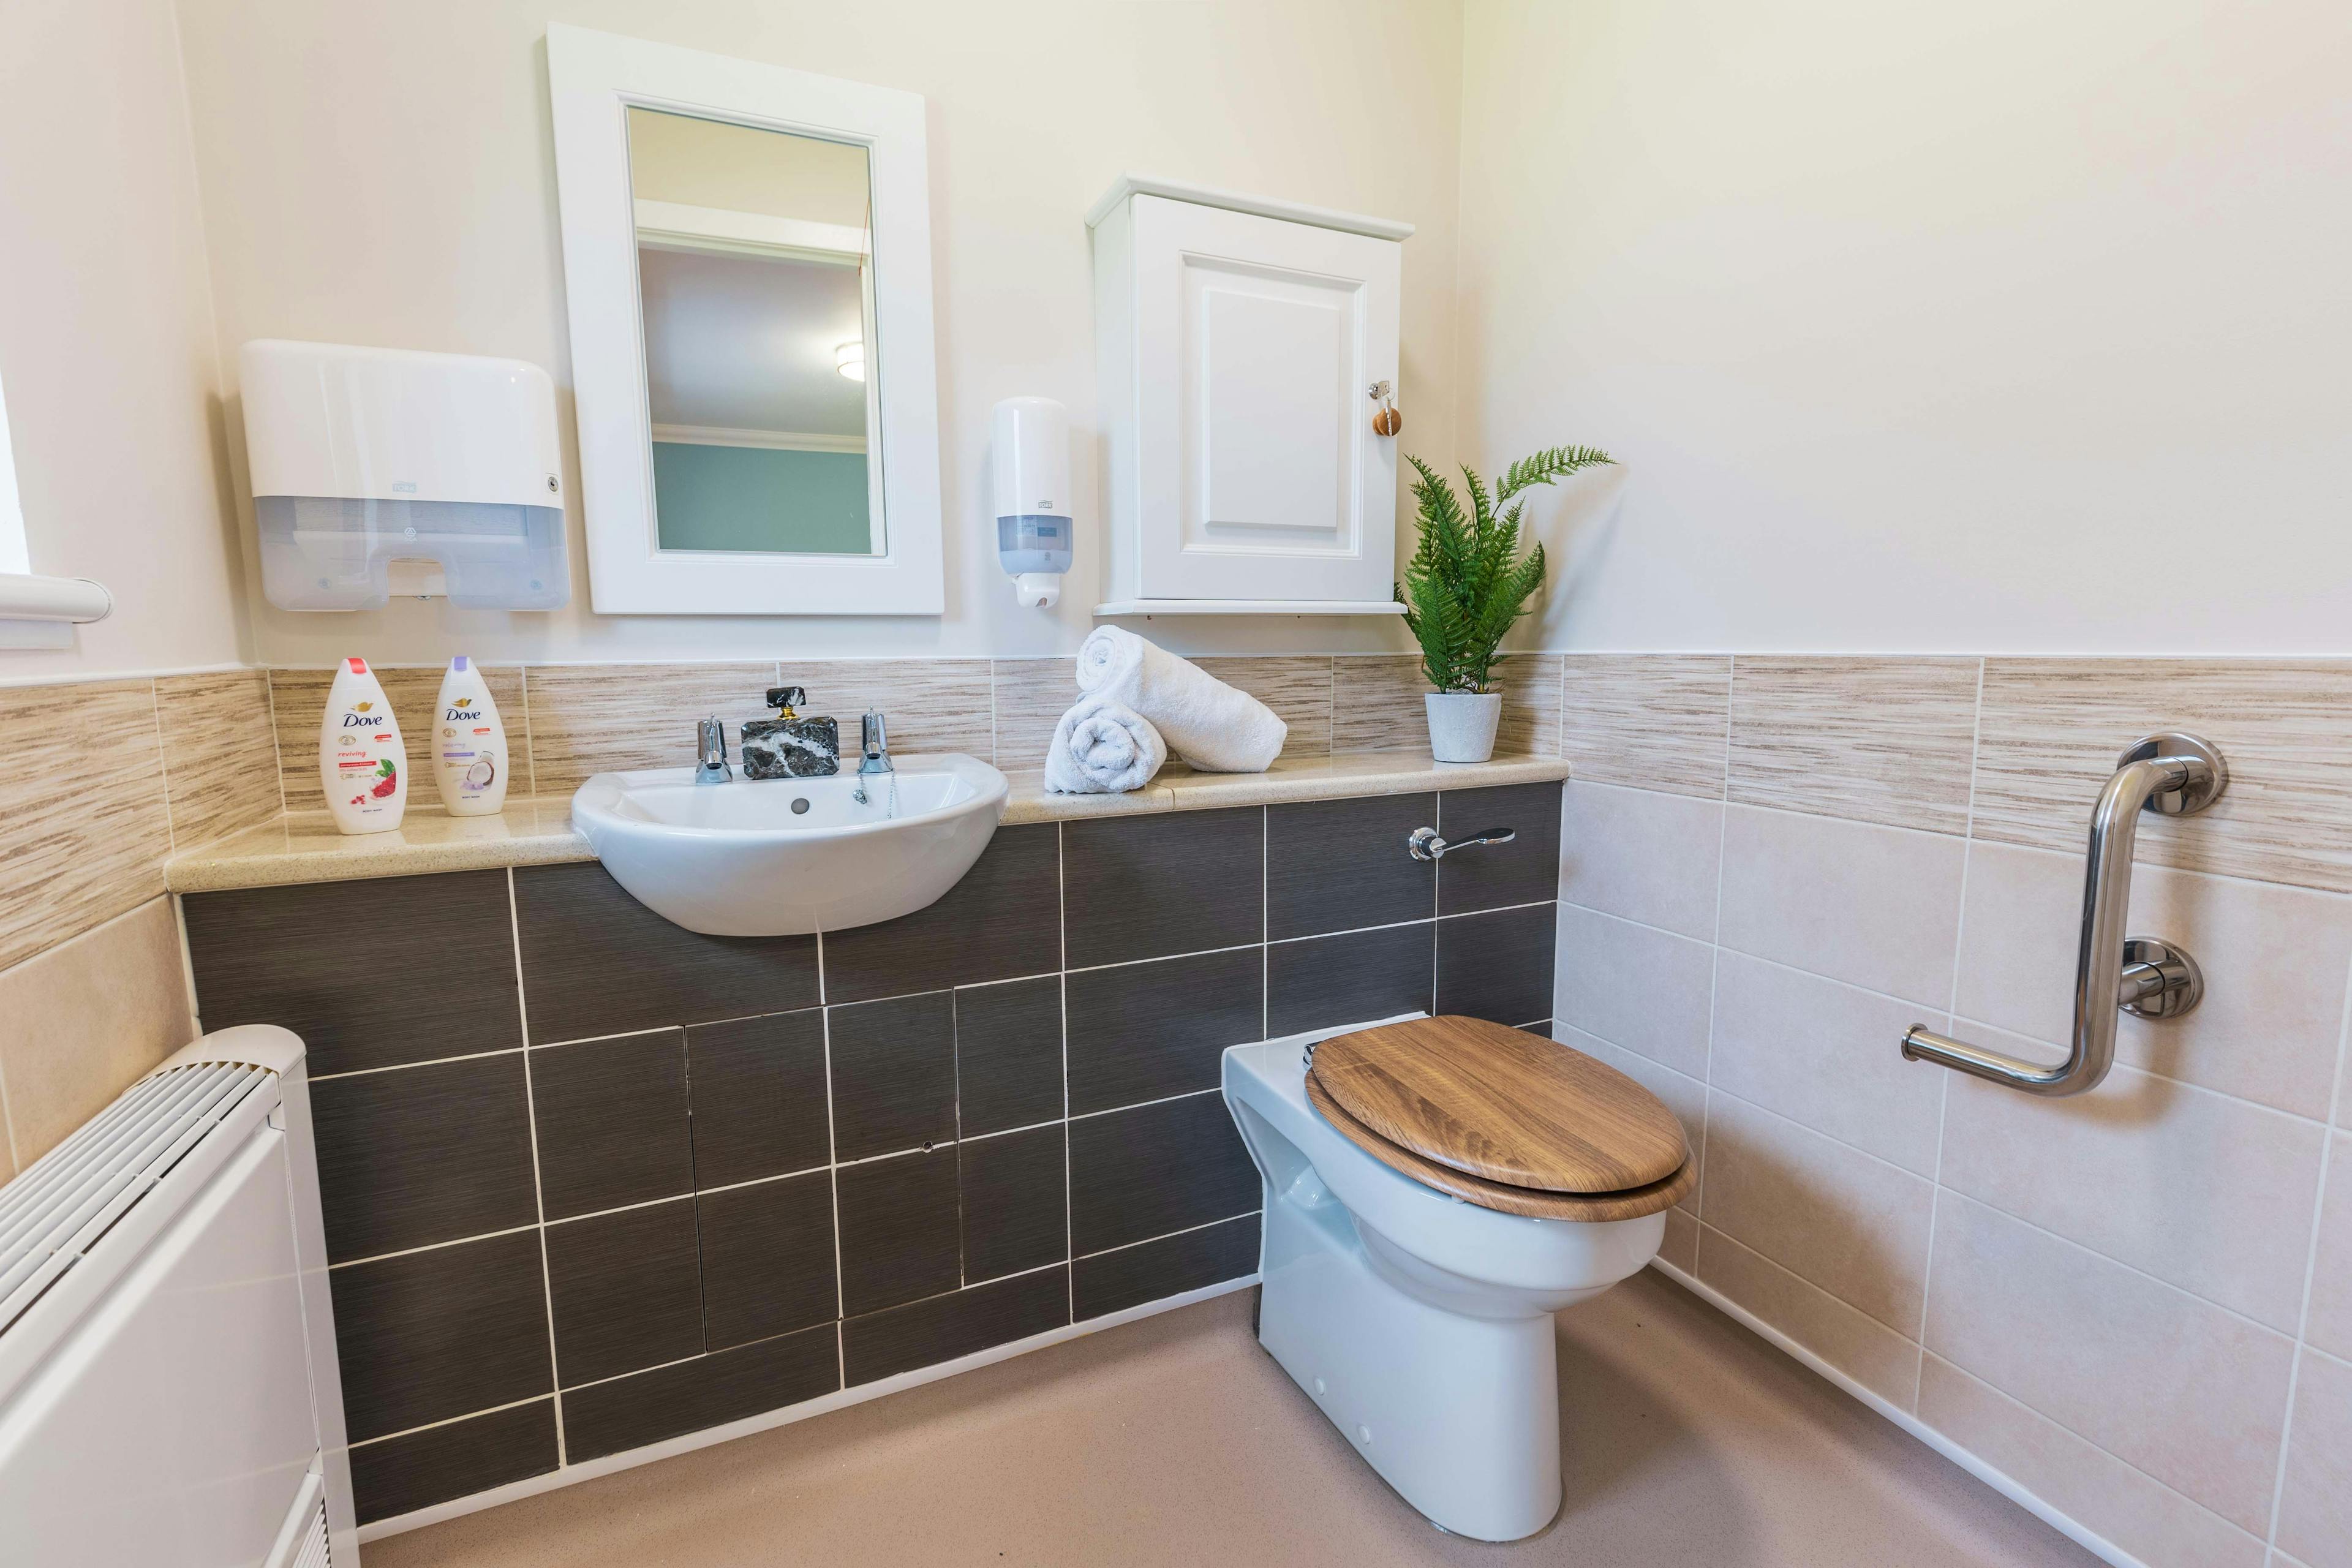 Bathroom at Kirkburn Court Care Home in Peterhead, Aberdeenshire